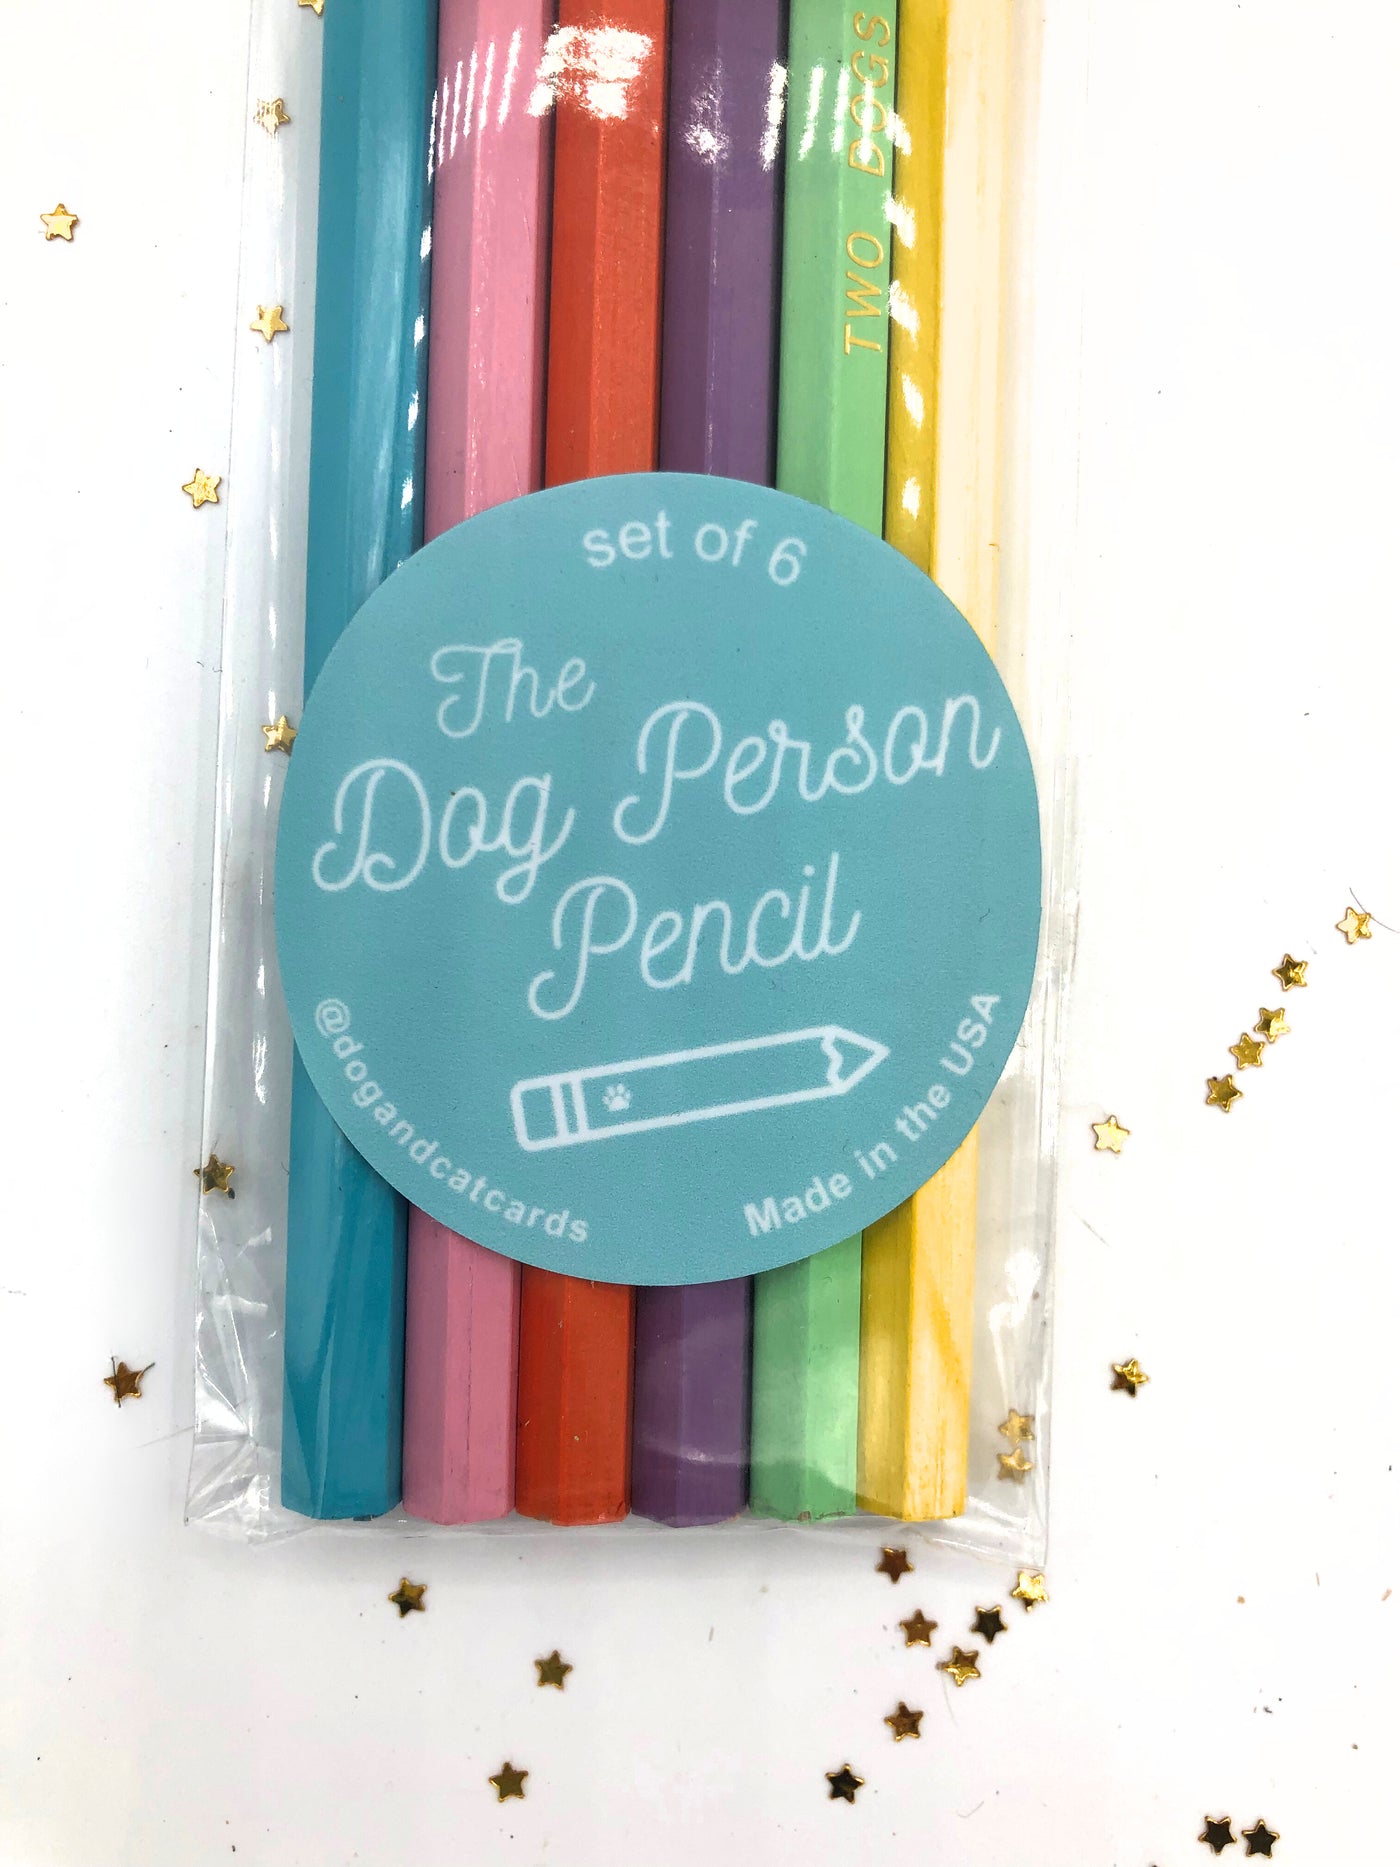 The Dog Person Pencil Set